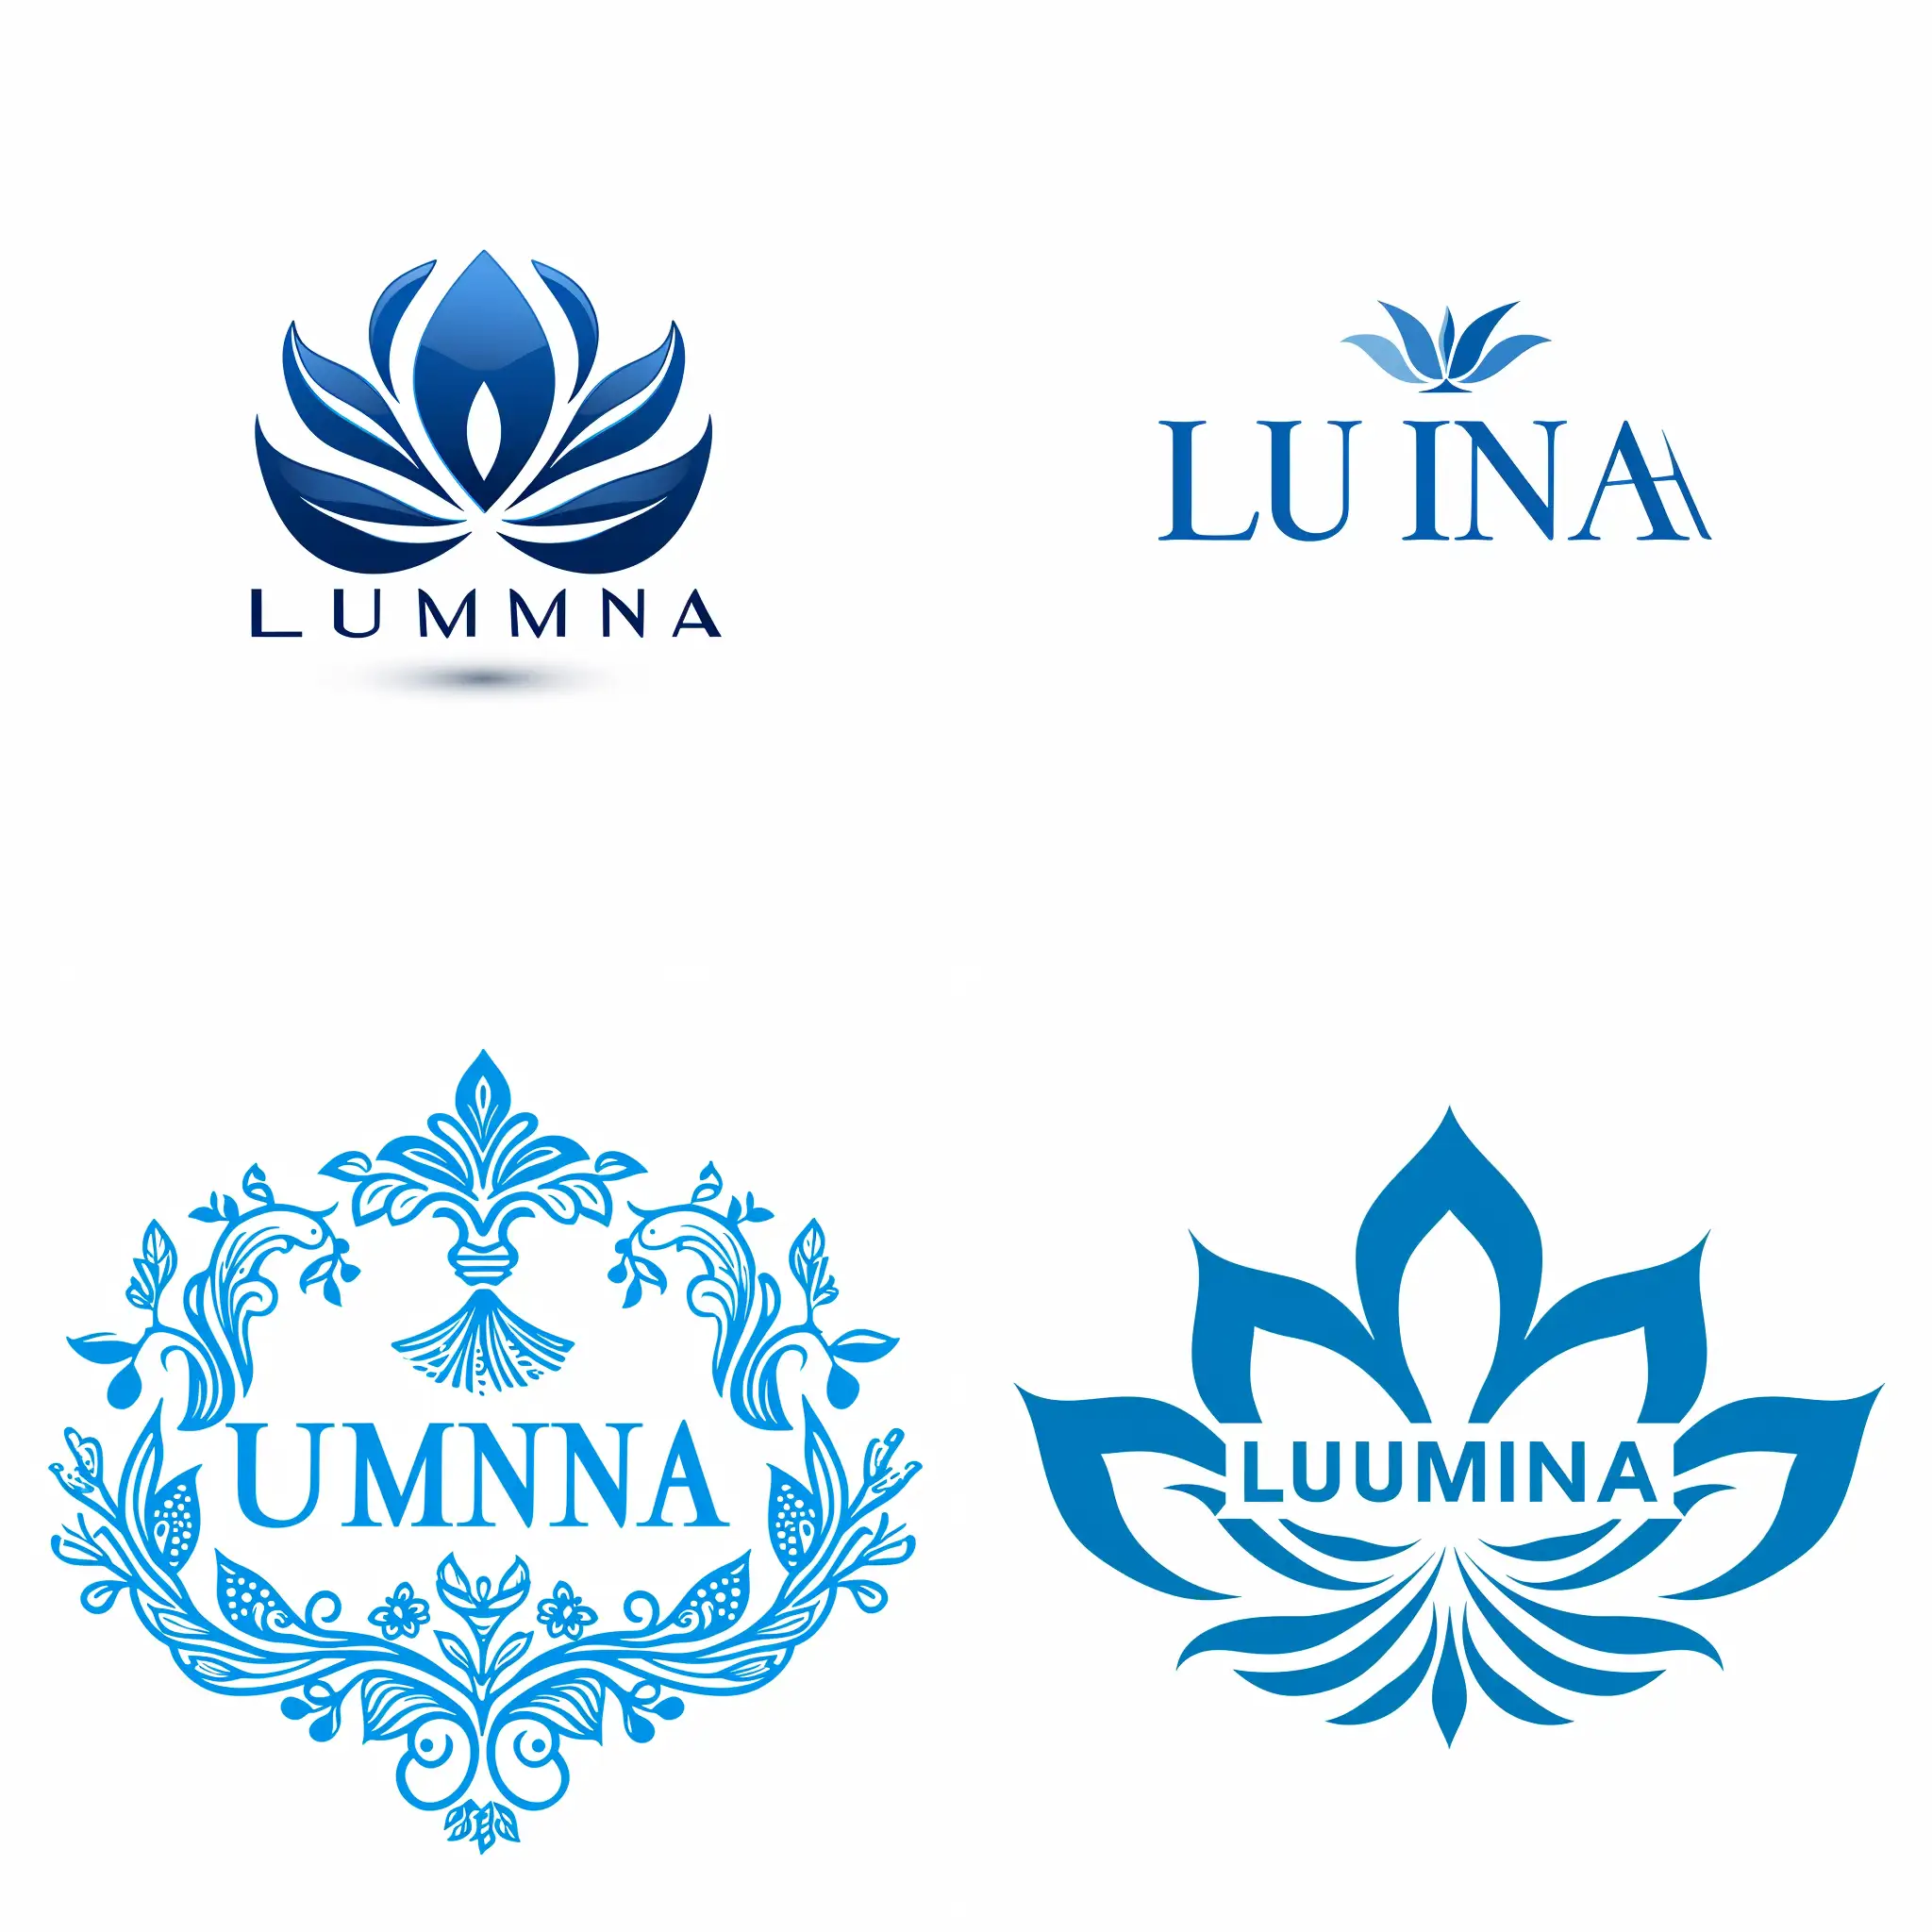 LUMINA-Cosmetics-Brand-Logo-in-Blue-on-White-Background